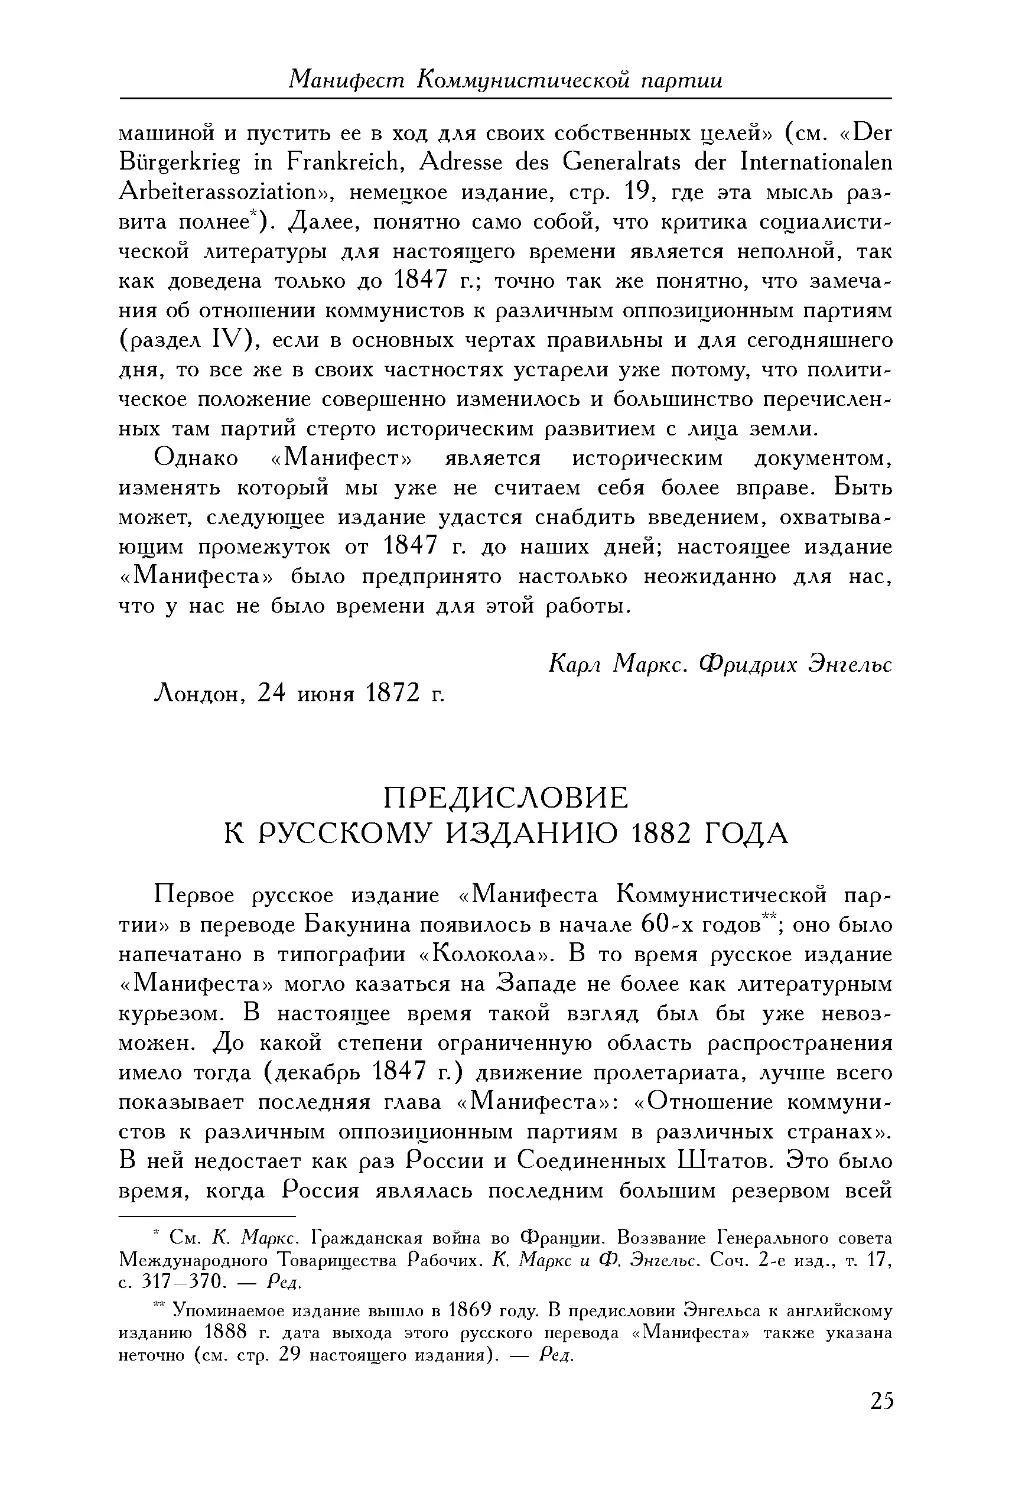 Предисловие  к  русскому  изданию  1882  года